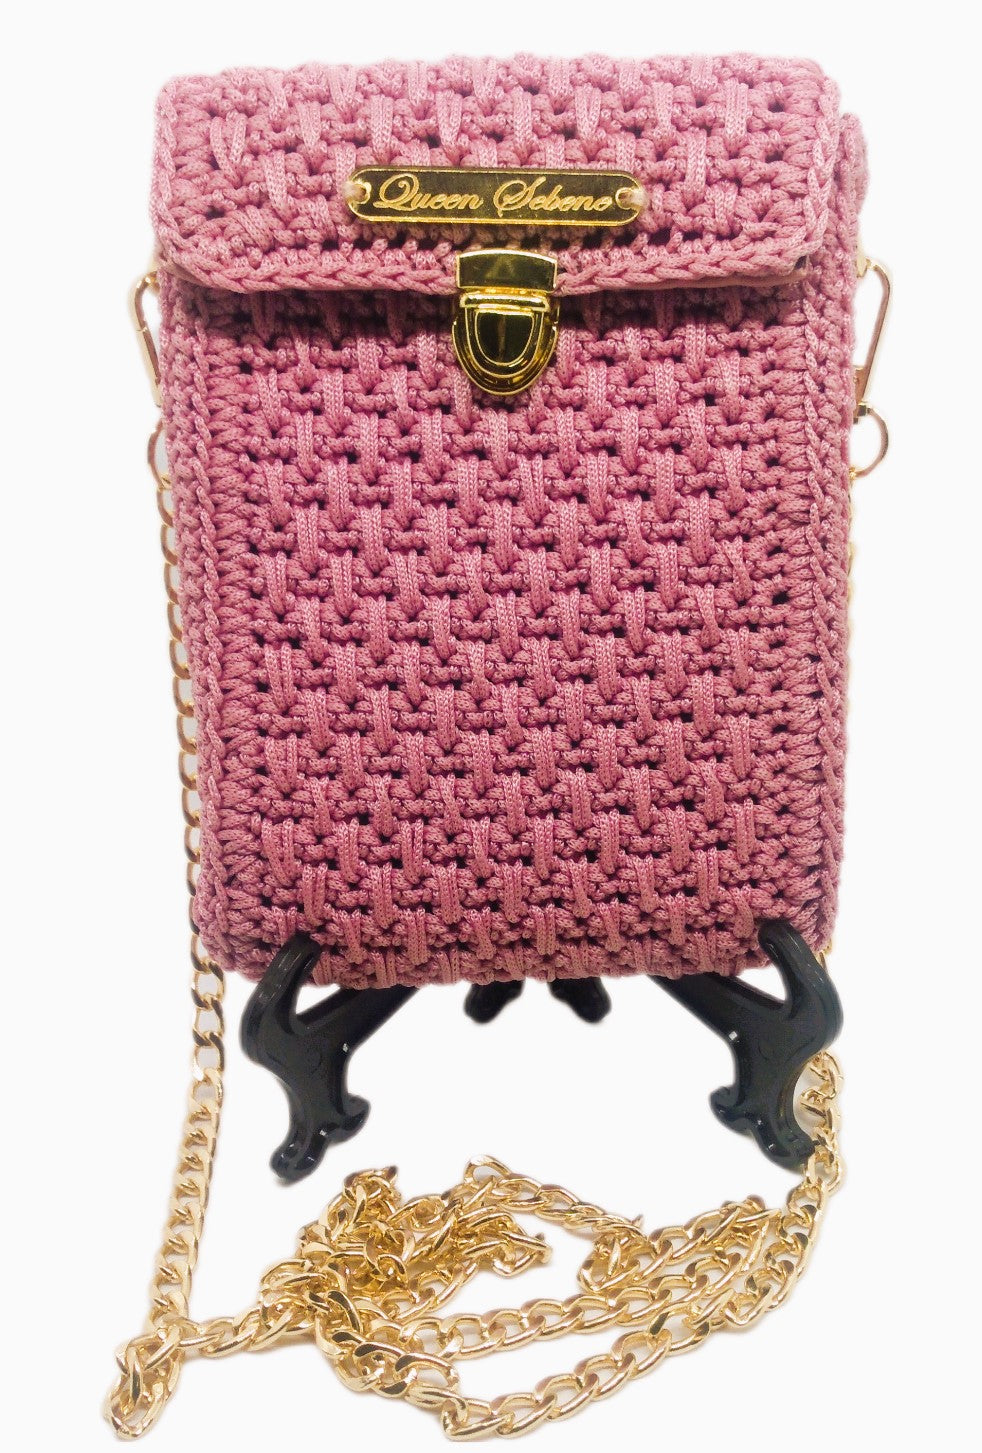 Front view of pink crochet crossbody bag